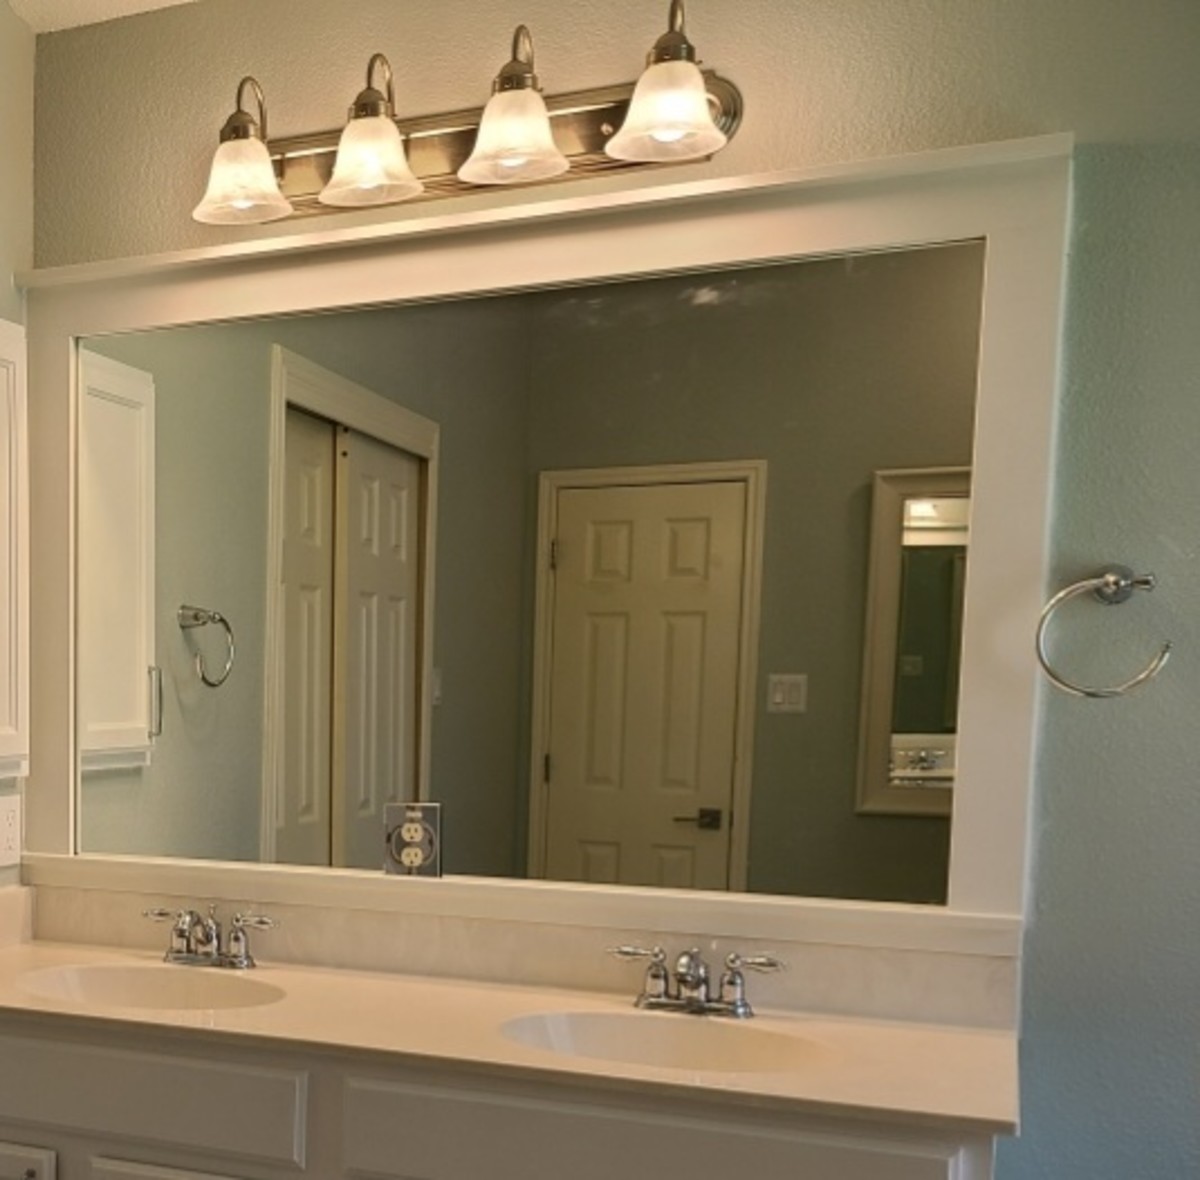 How to Frame a Builder Grade Bathroom Mirror the Easy Way